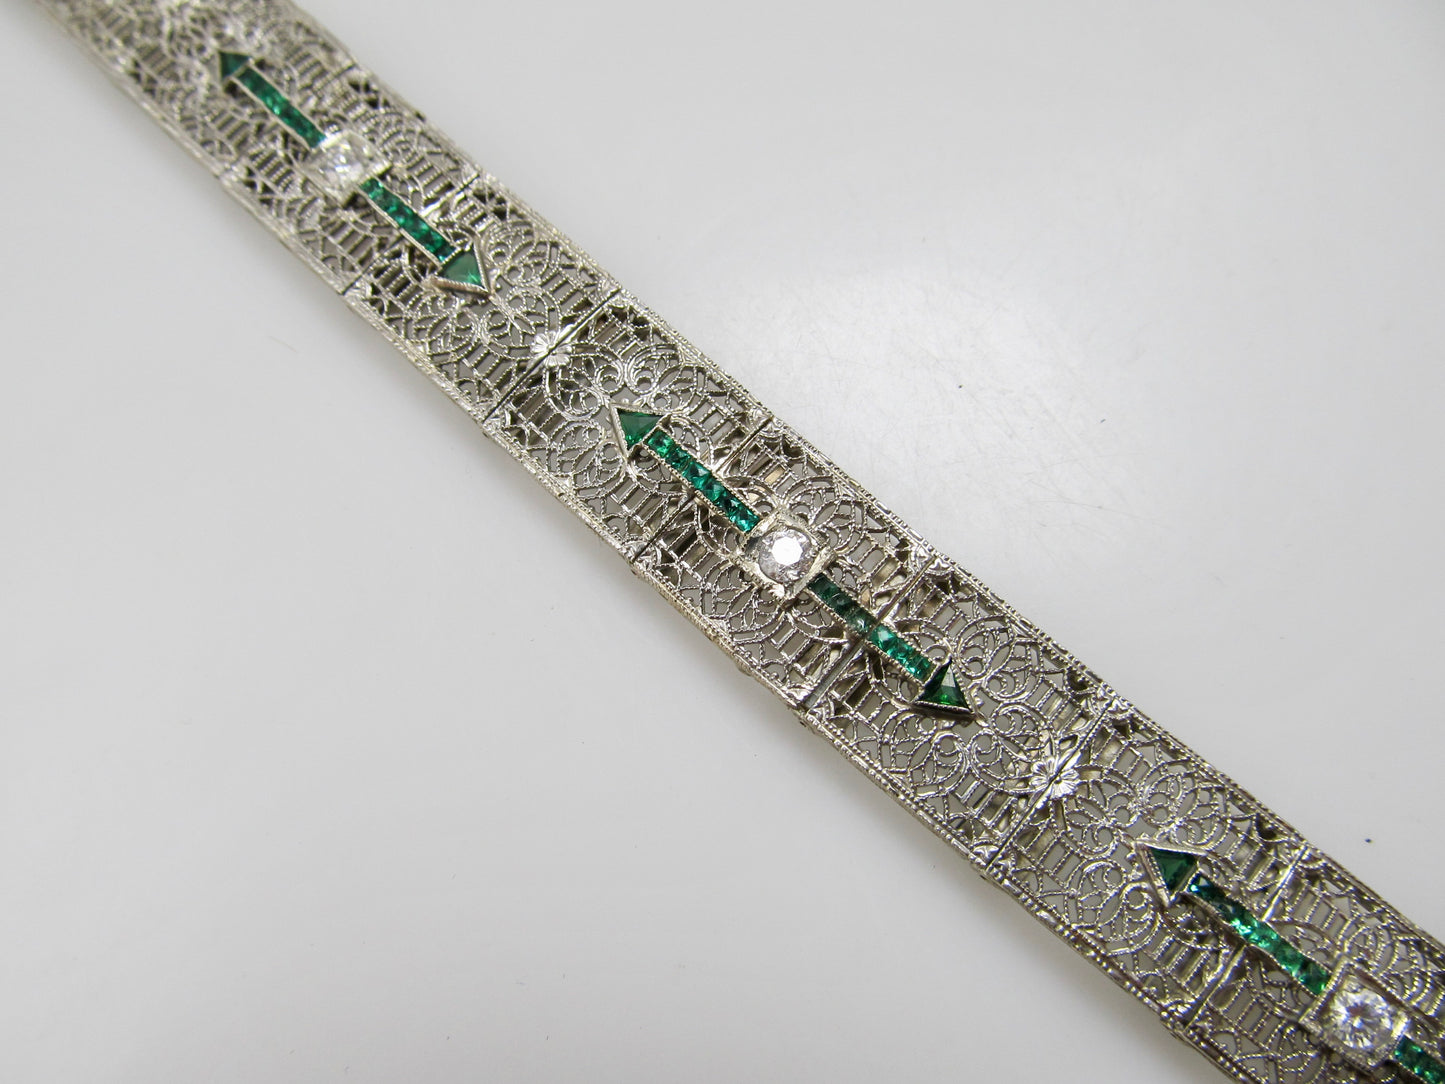 Antique filigree emerald and diamond bracelet